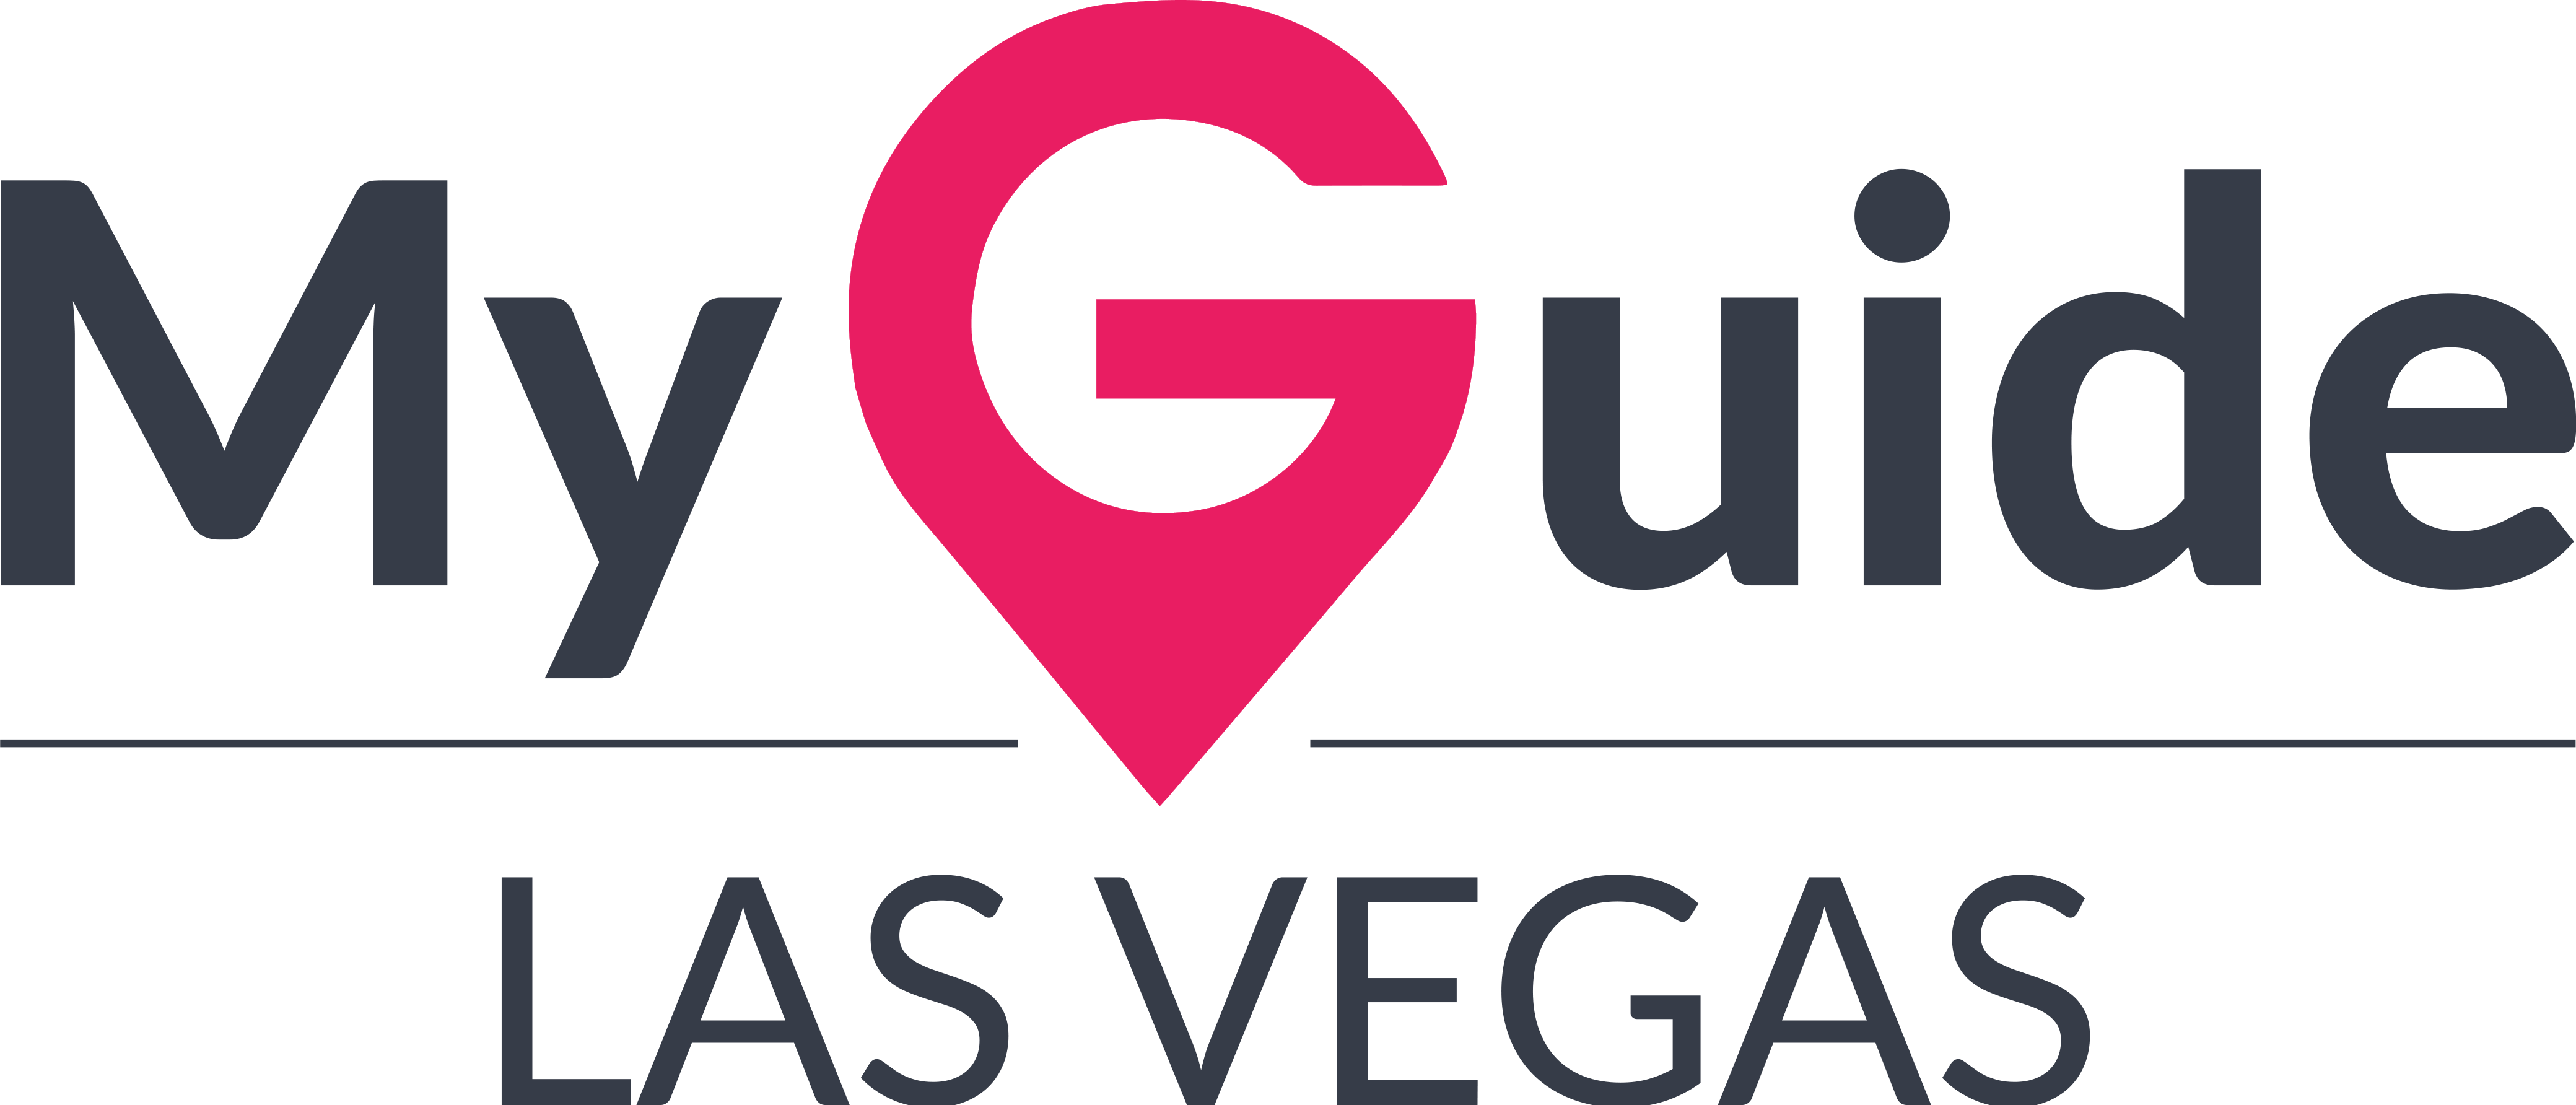 My Guide Las Vegas